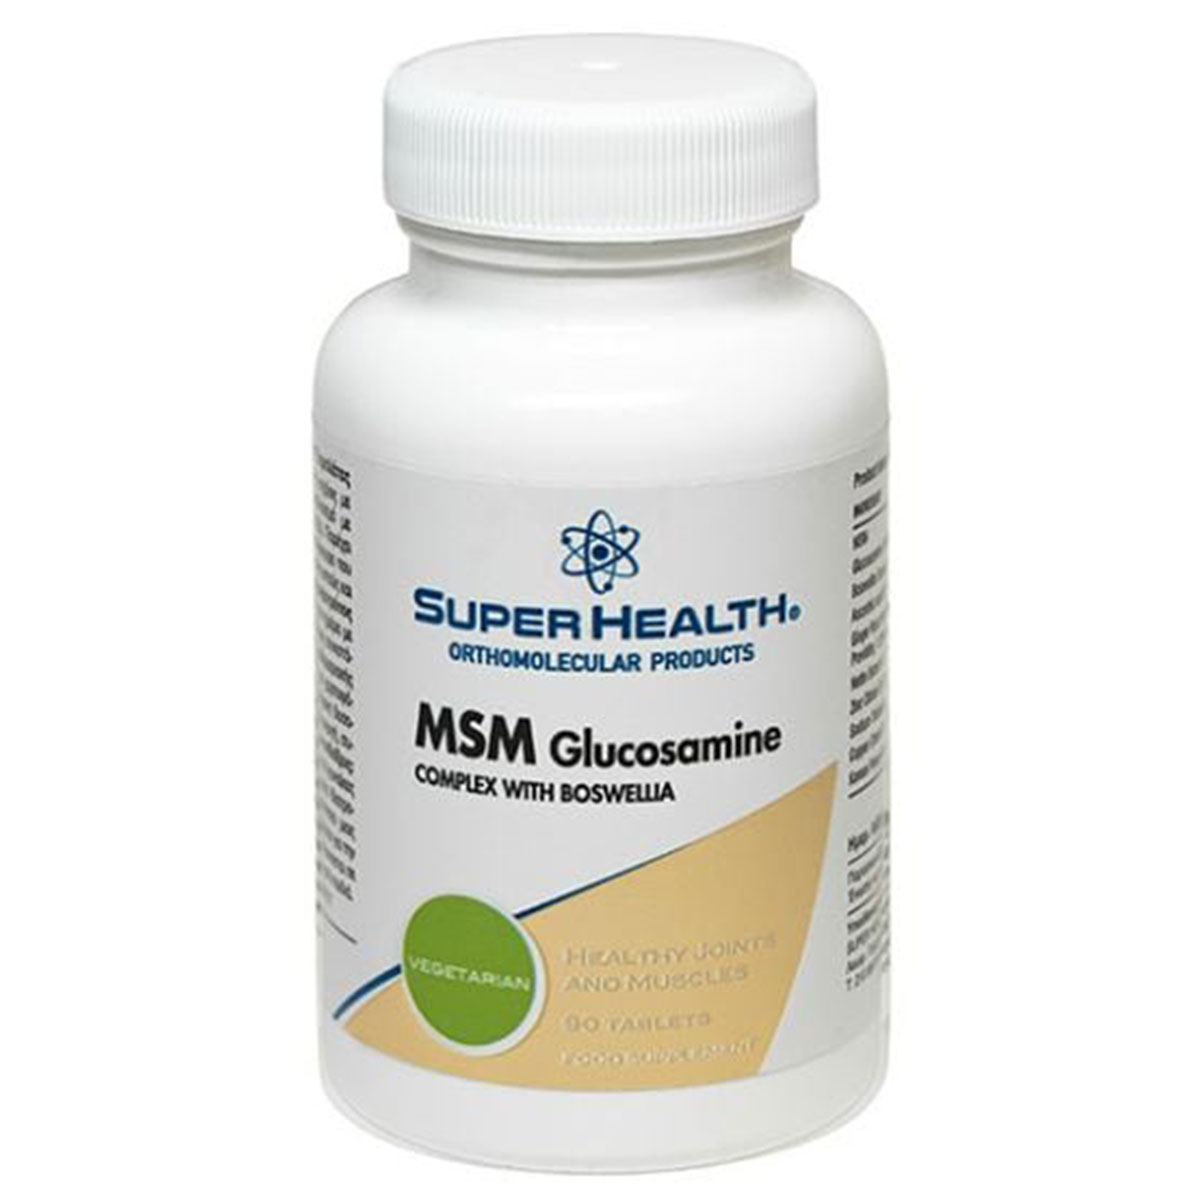 msm glucosamine